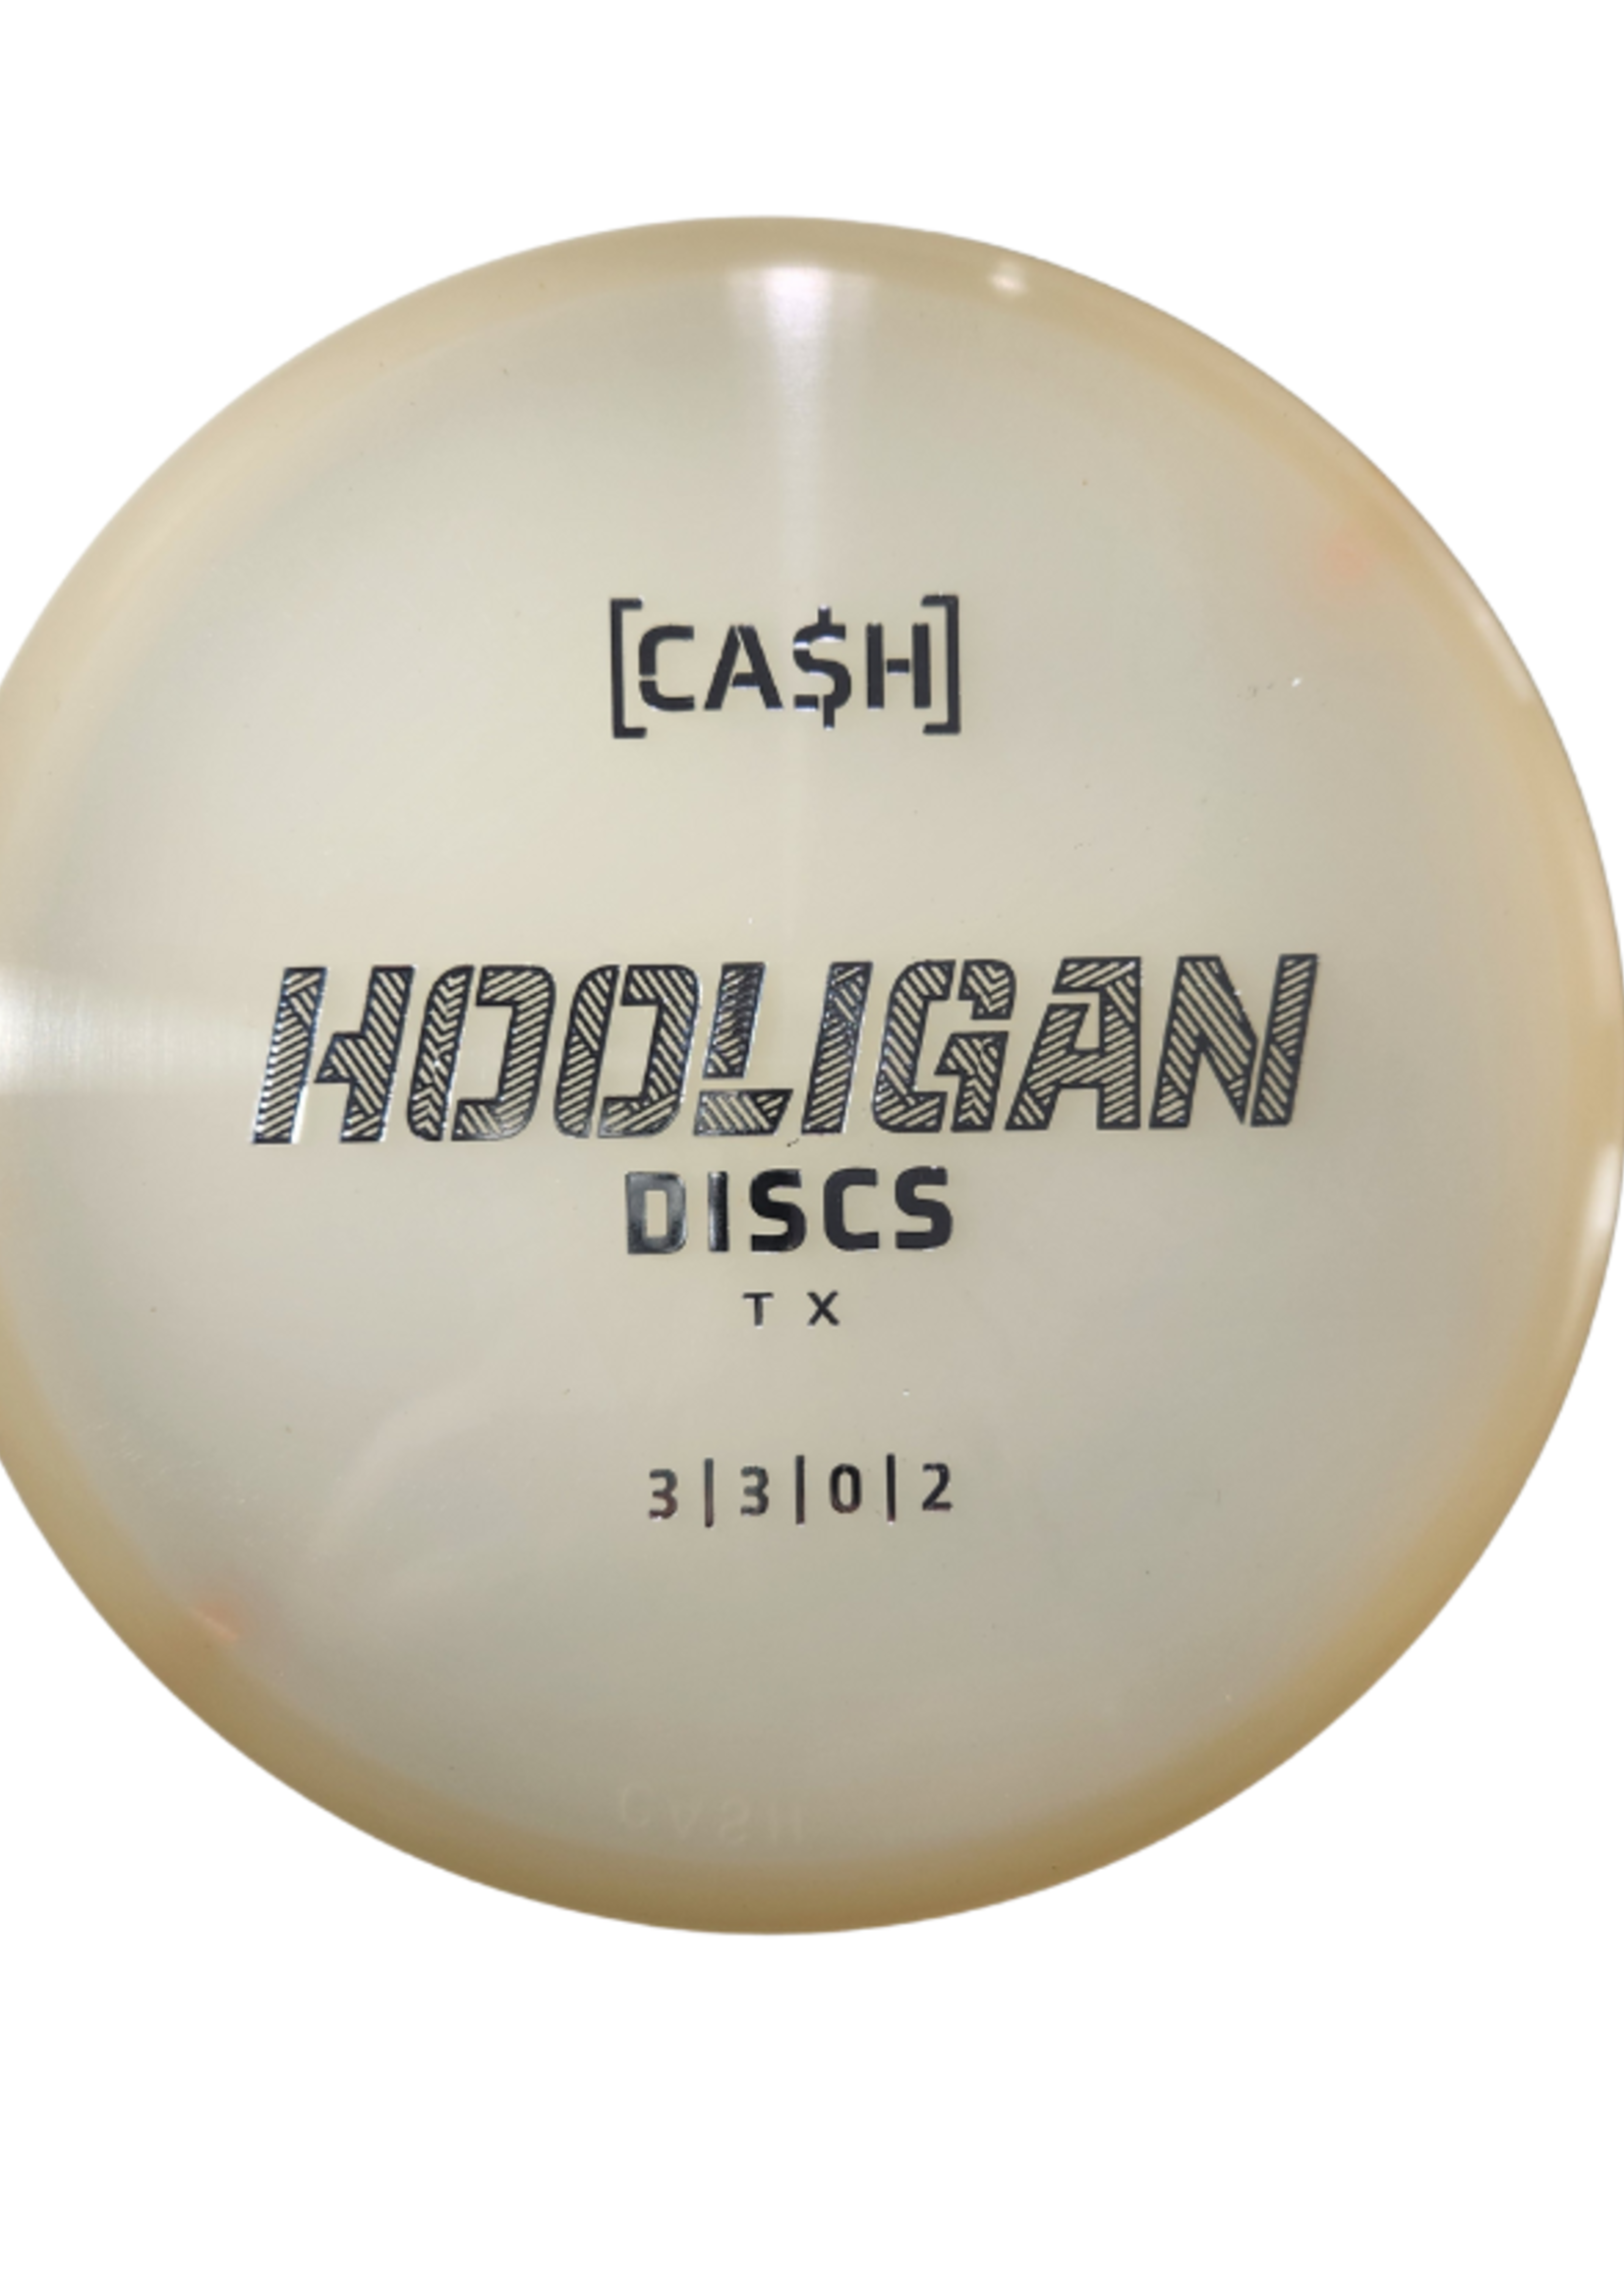 Hooligan Discs TX Hooligan Discs CASH